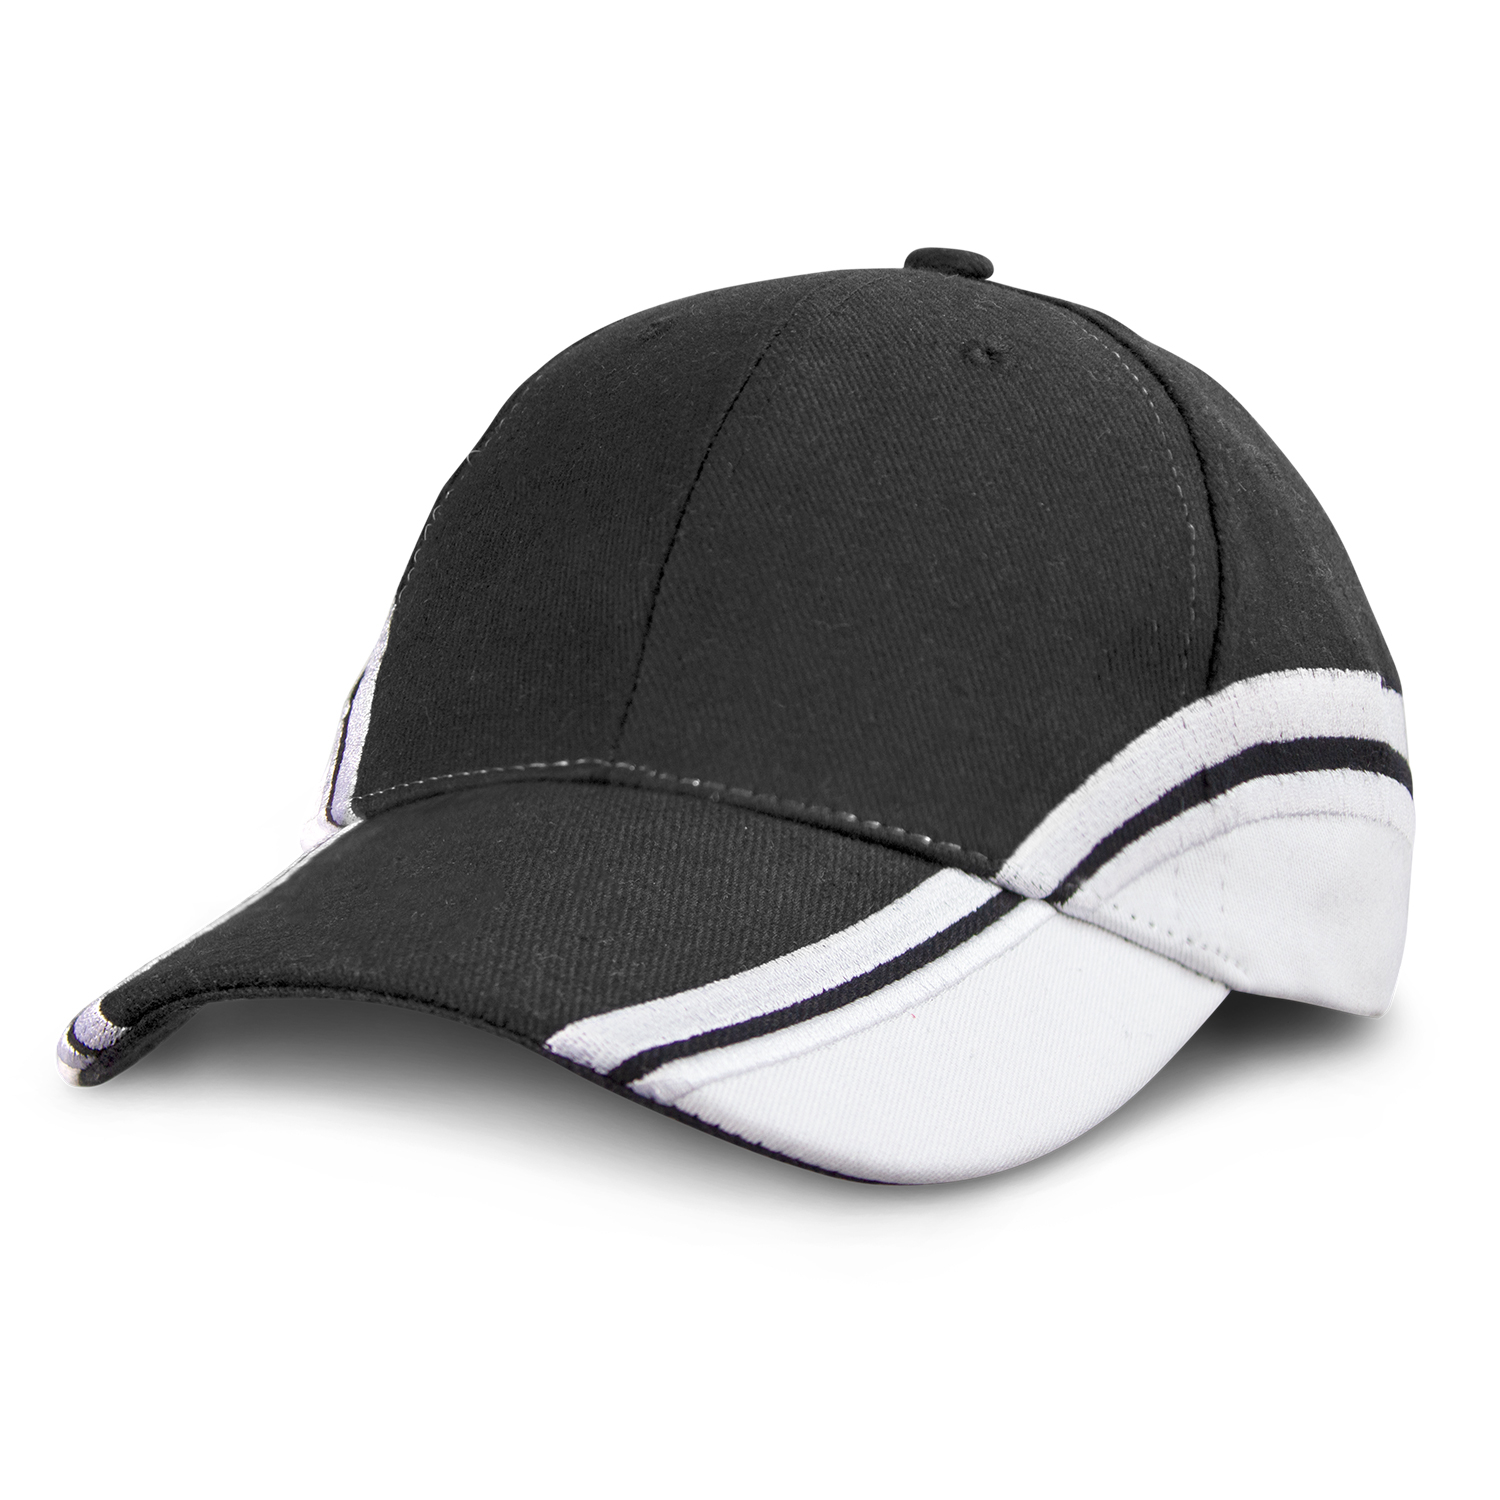 Summer Silverstone Cap cap